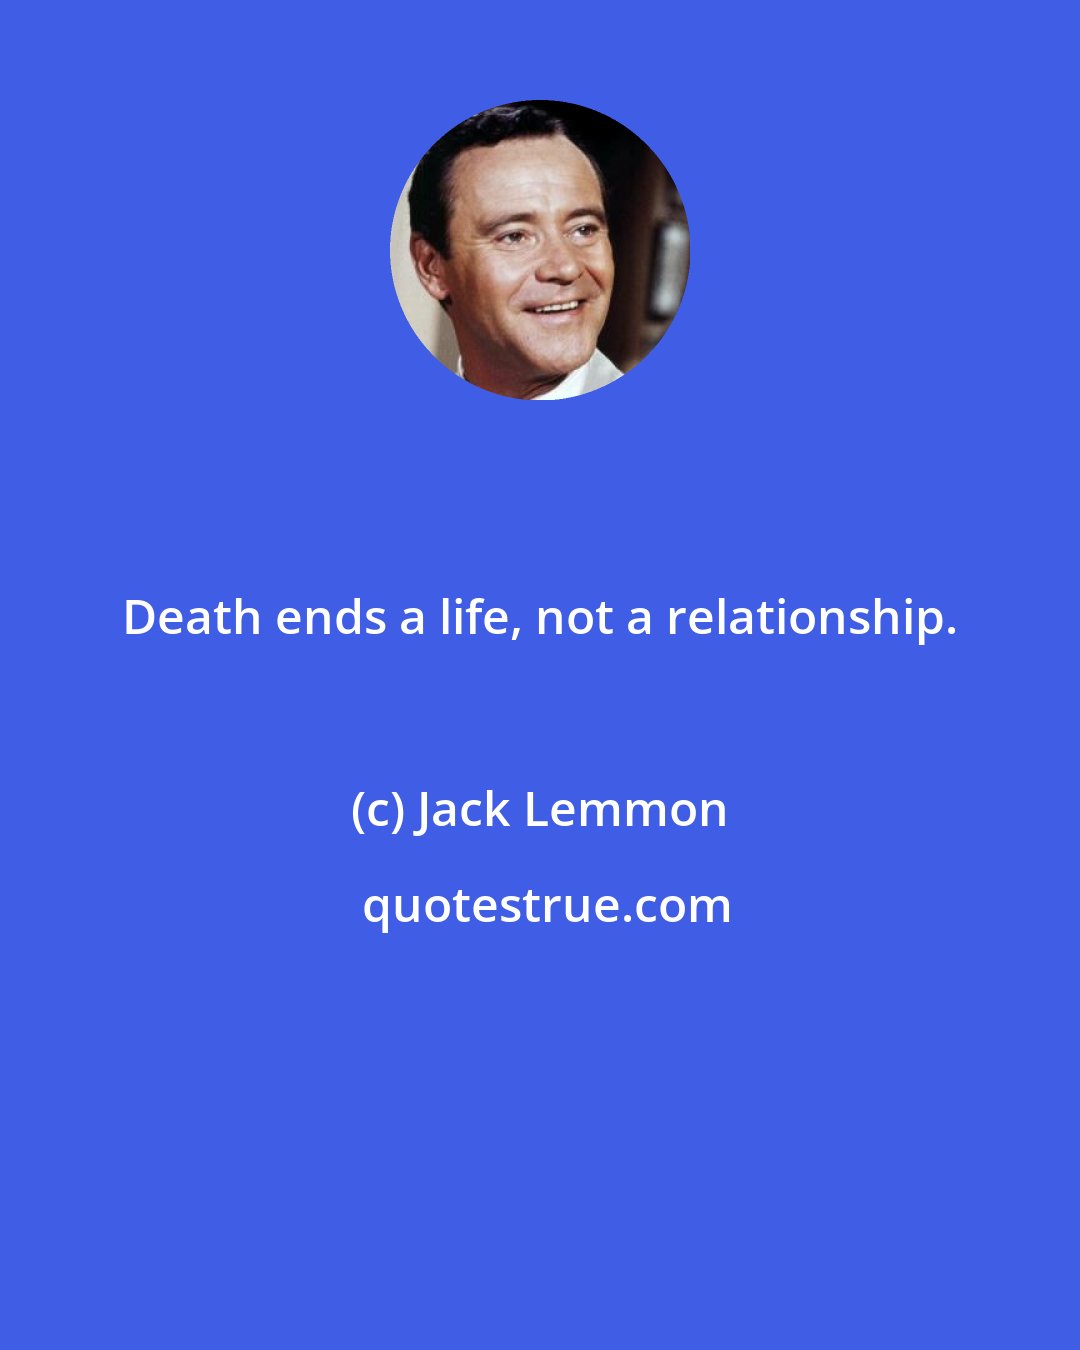 Jack Lemmon: Death ends a life, not a relationship.